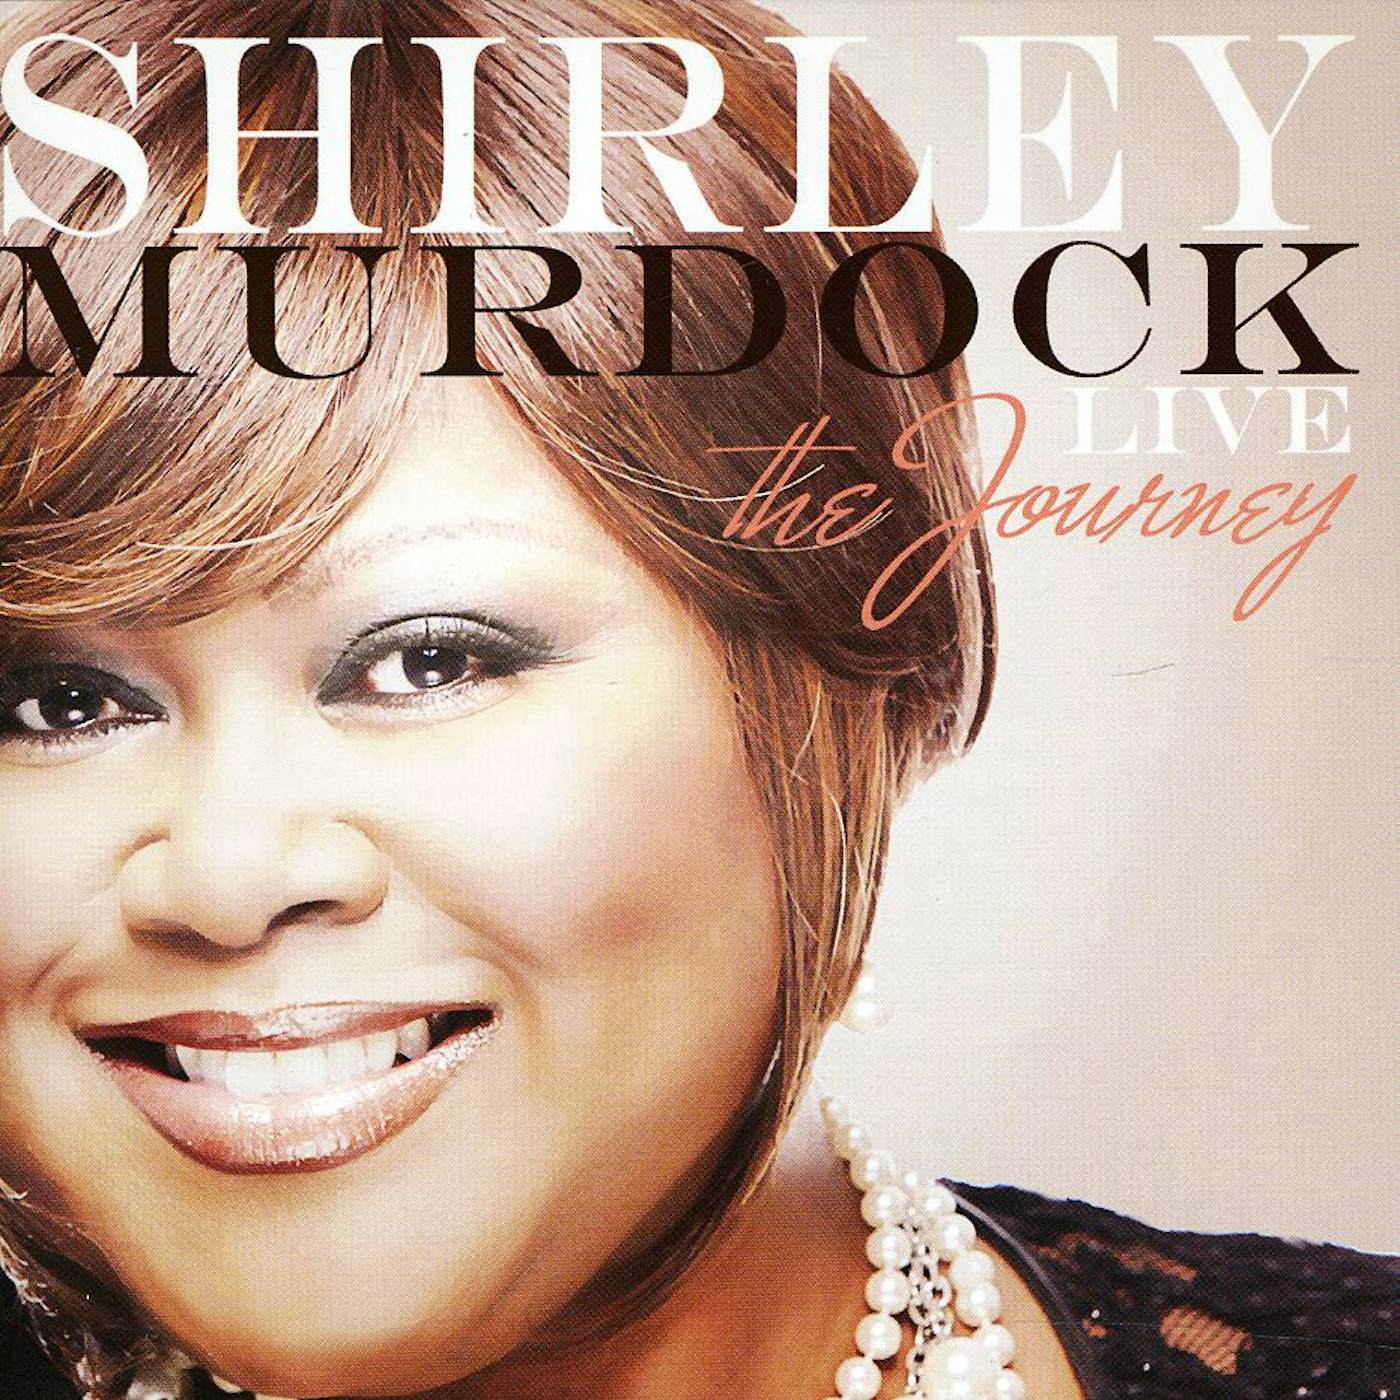 Shirley Murdock LIVE: THE JOURNEY CD